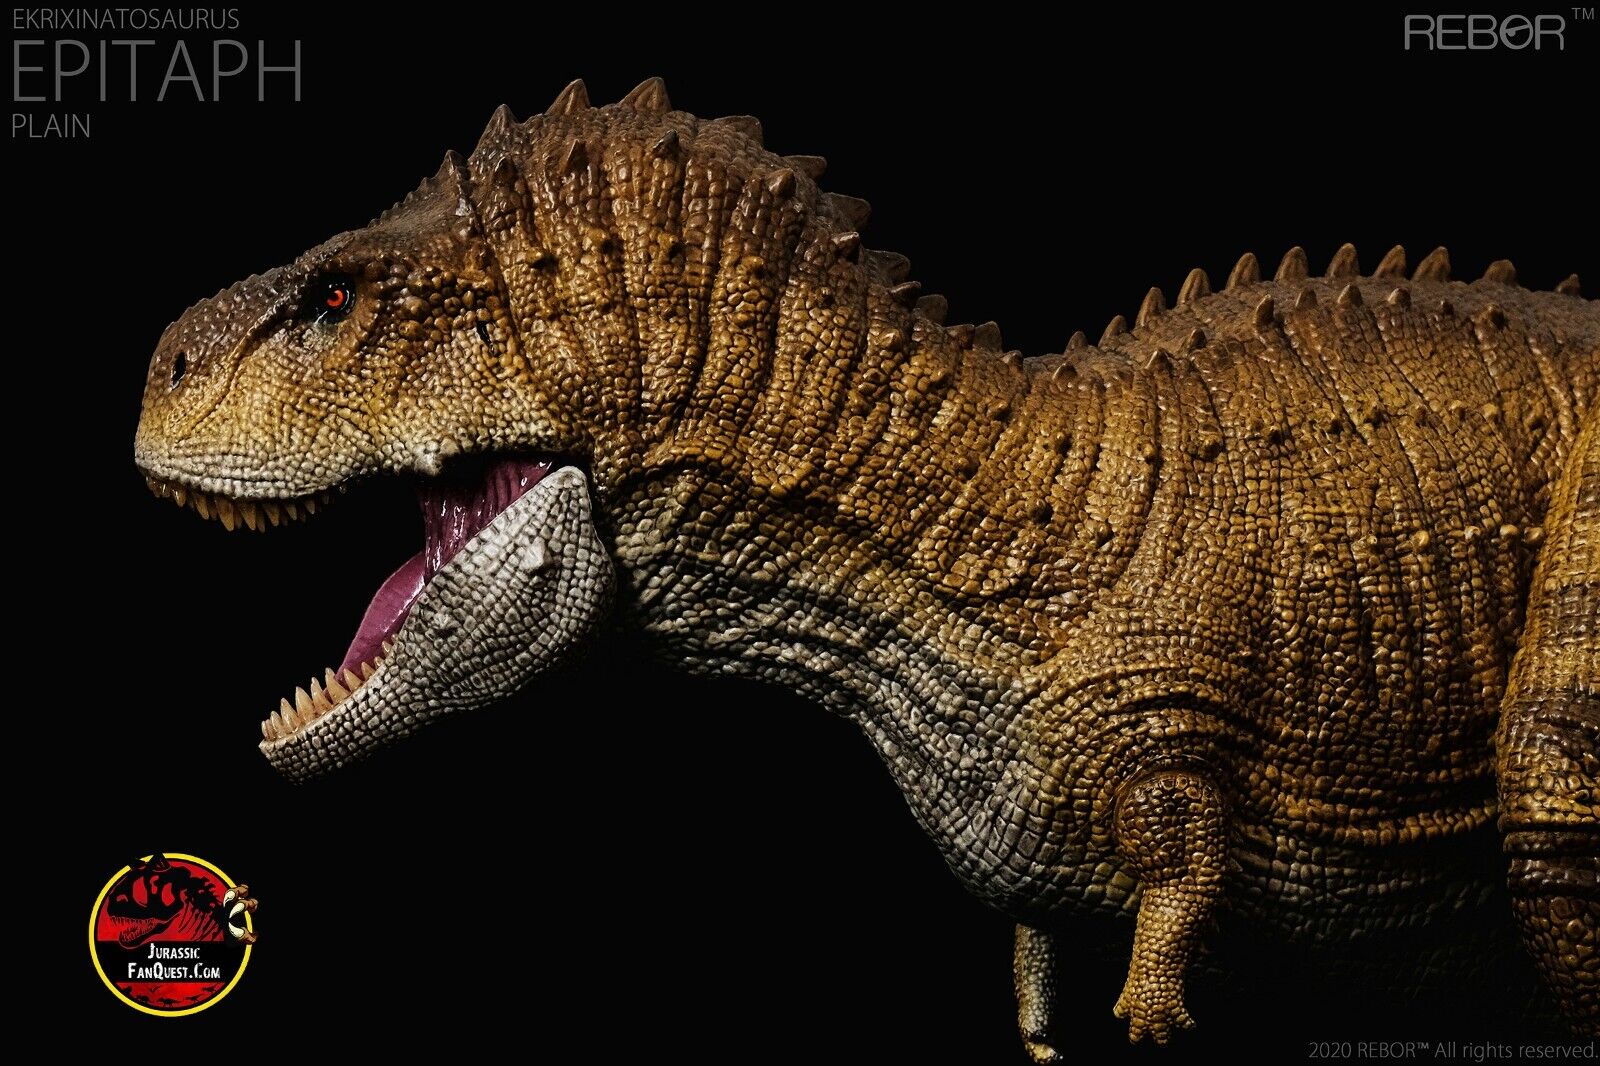 Rebor 1:35 Ekrixinatosaurus Epitaph Museum Class Replica Dinosaur Figure